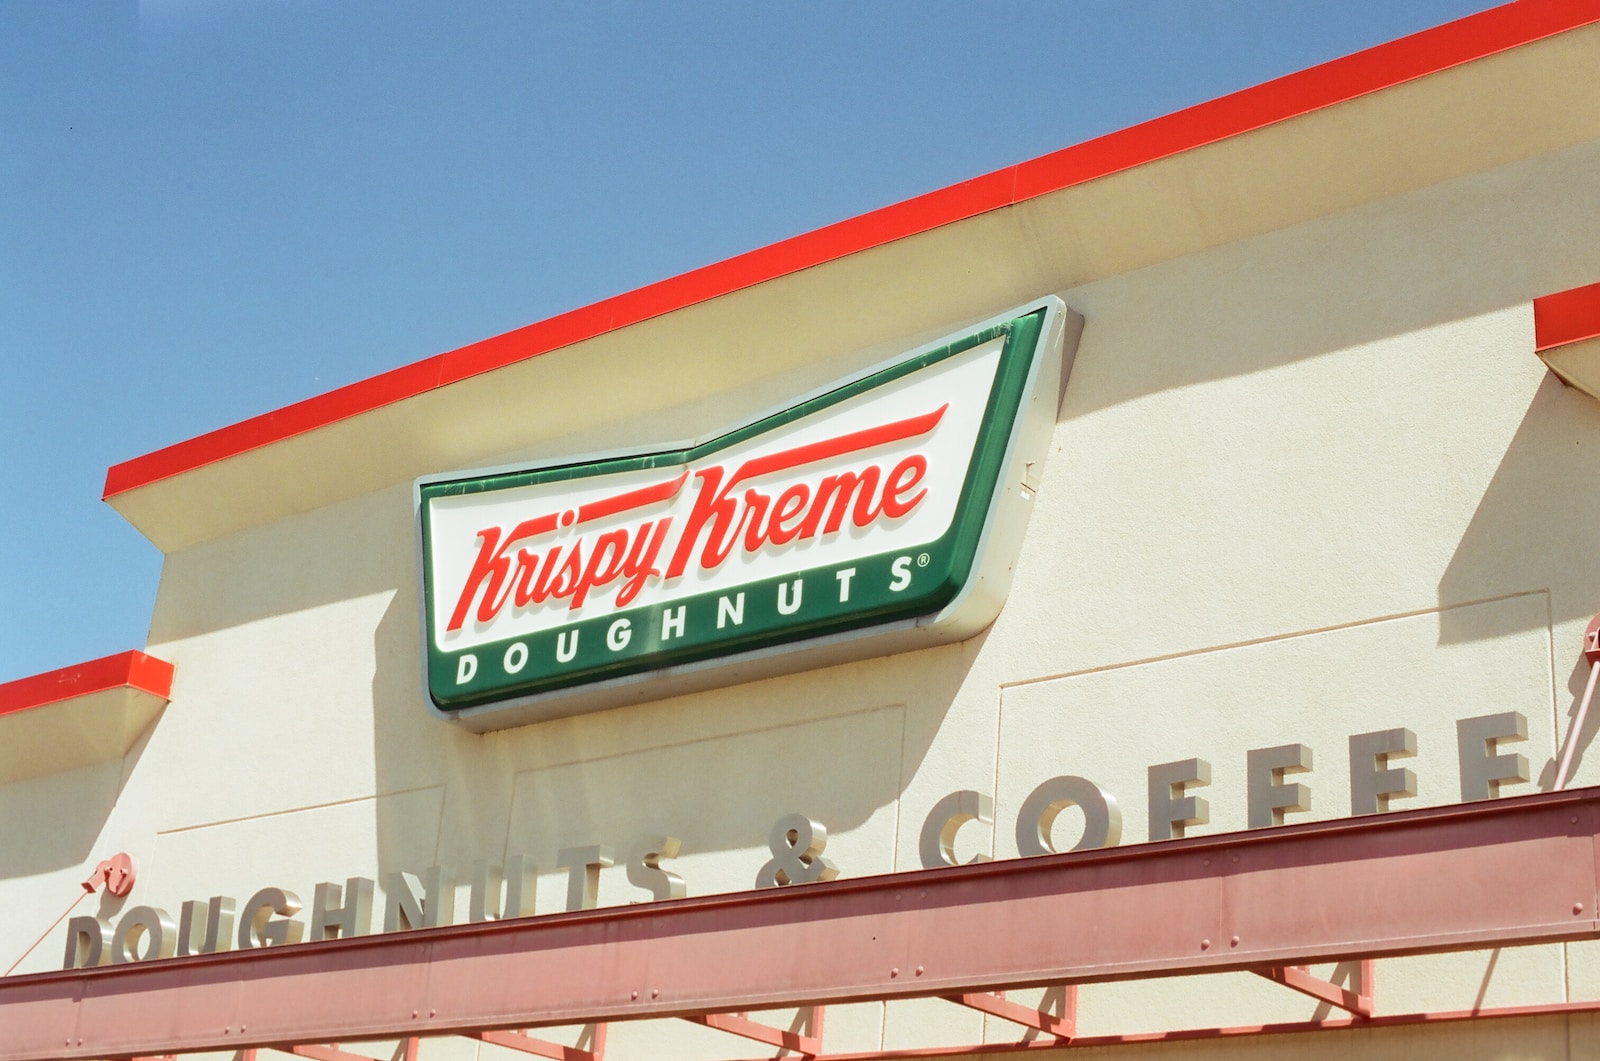 a krispy kreme doughnuts sign above a doughnut shop